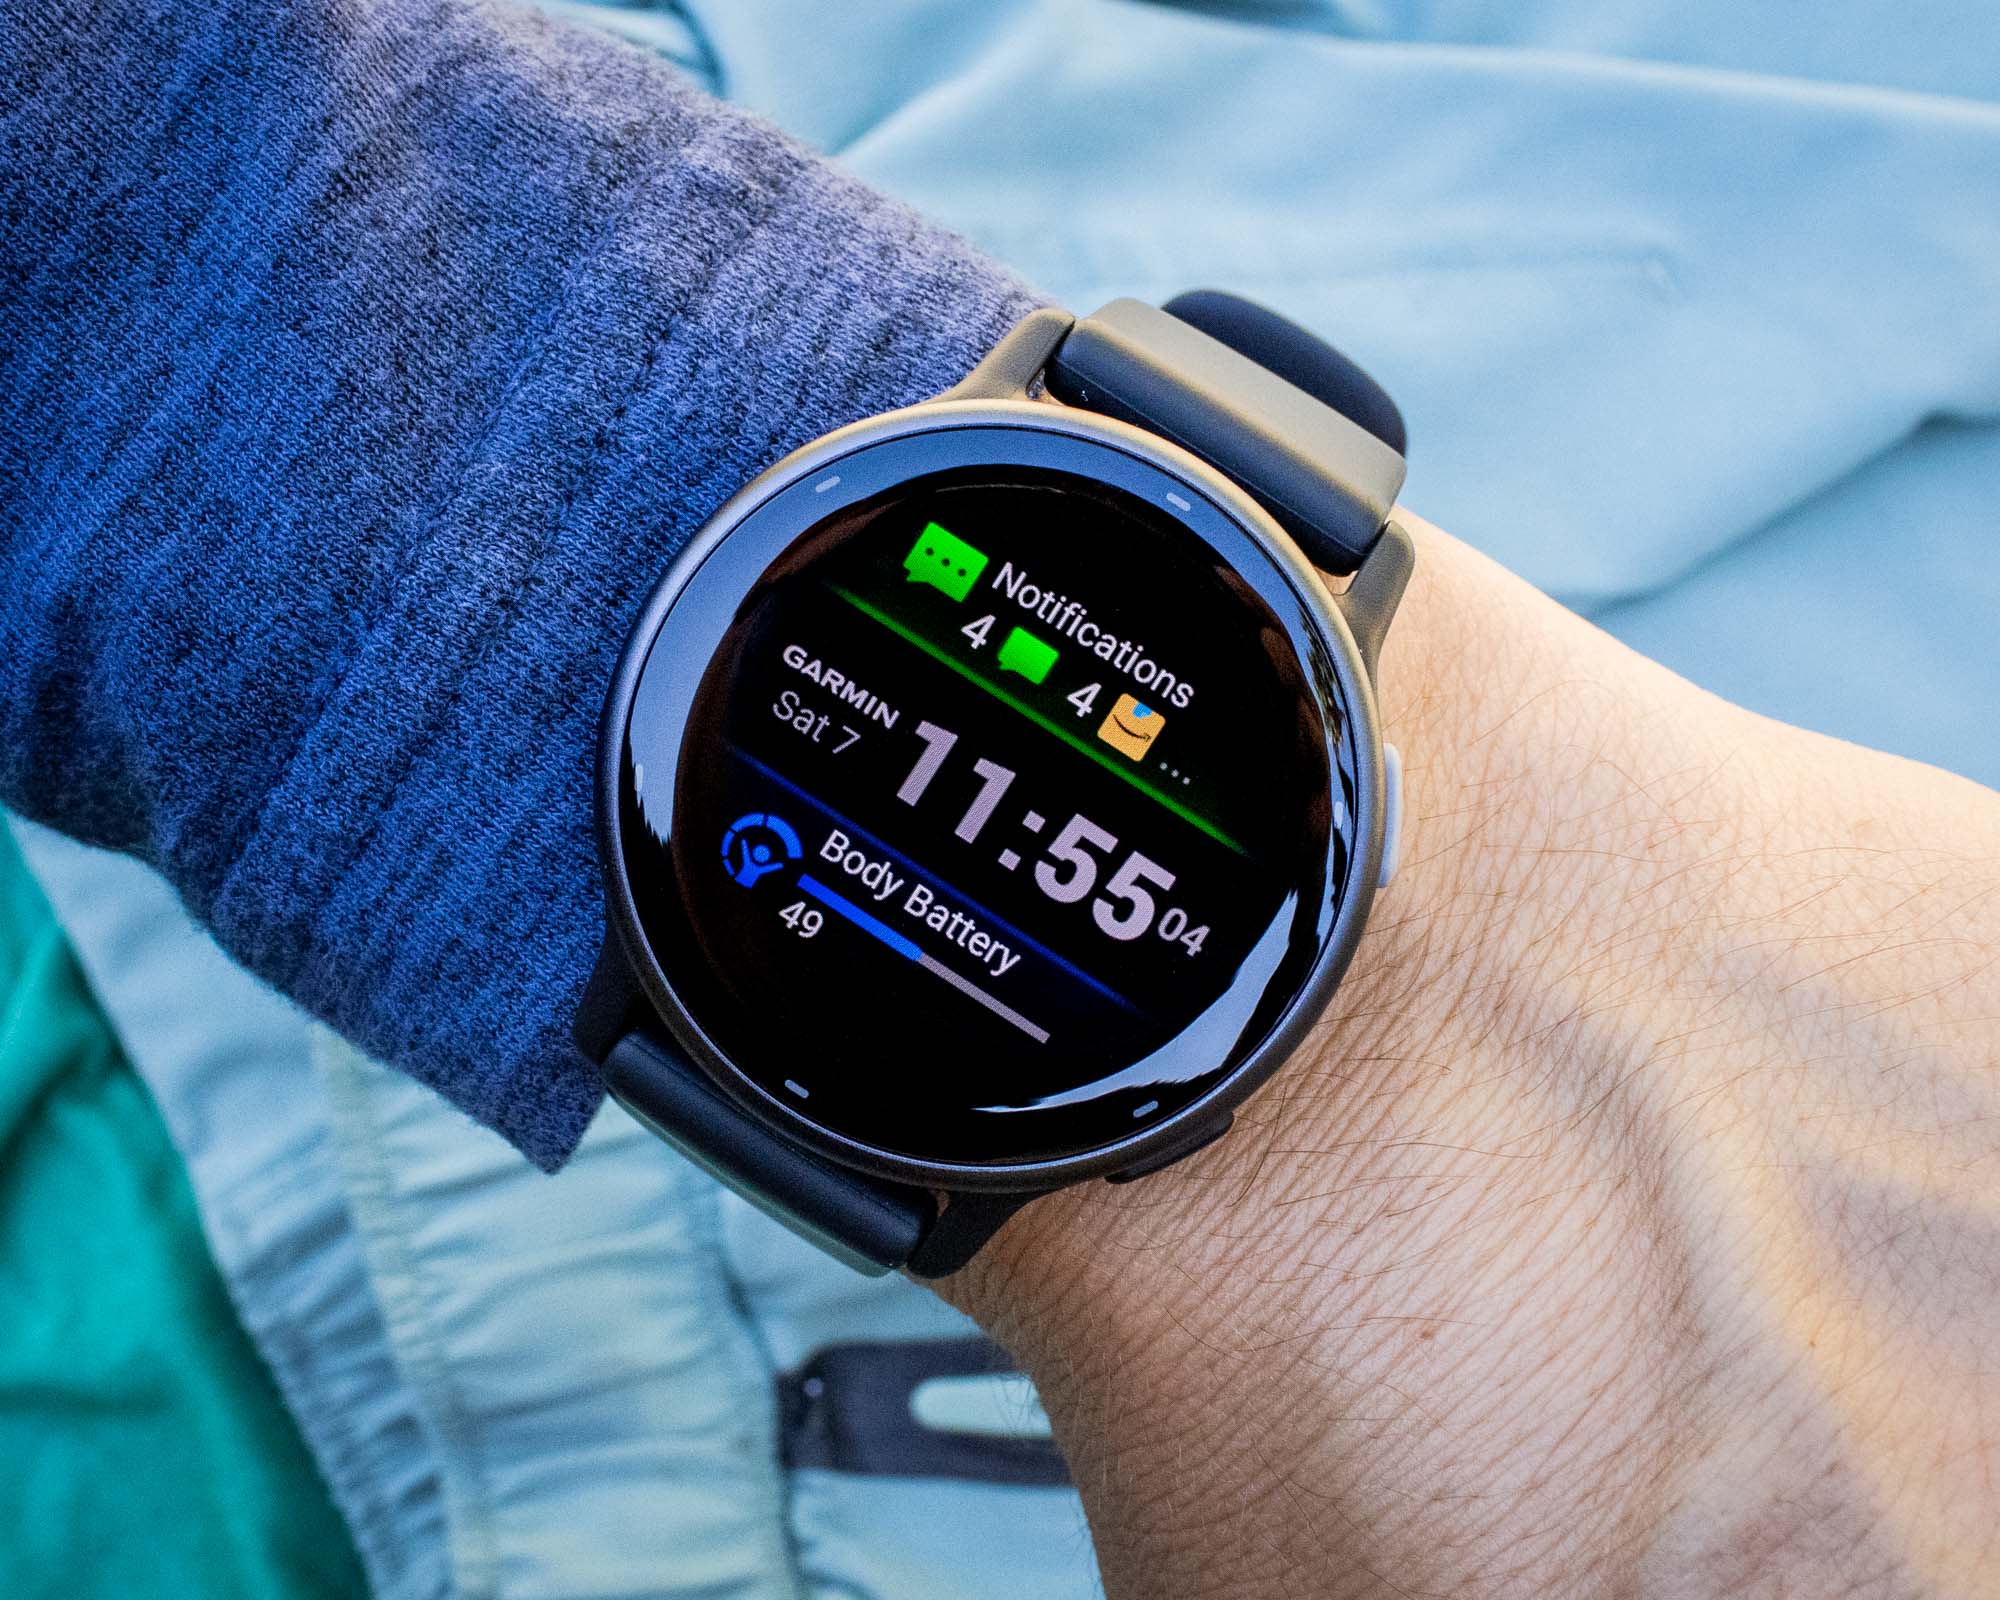 Garmin vivoactive 5 Fitness GPS Smartwatch, Brand New